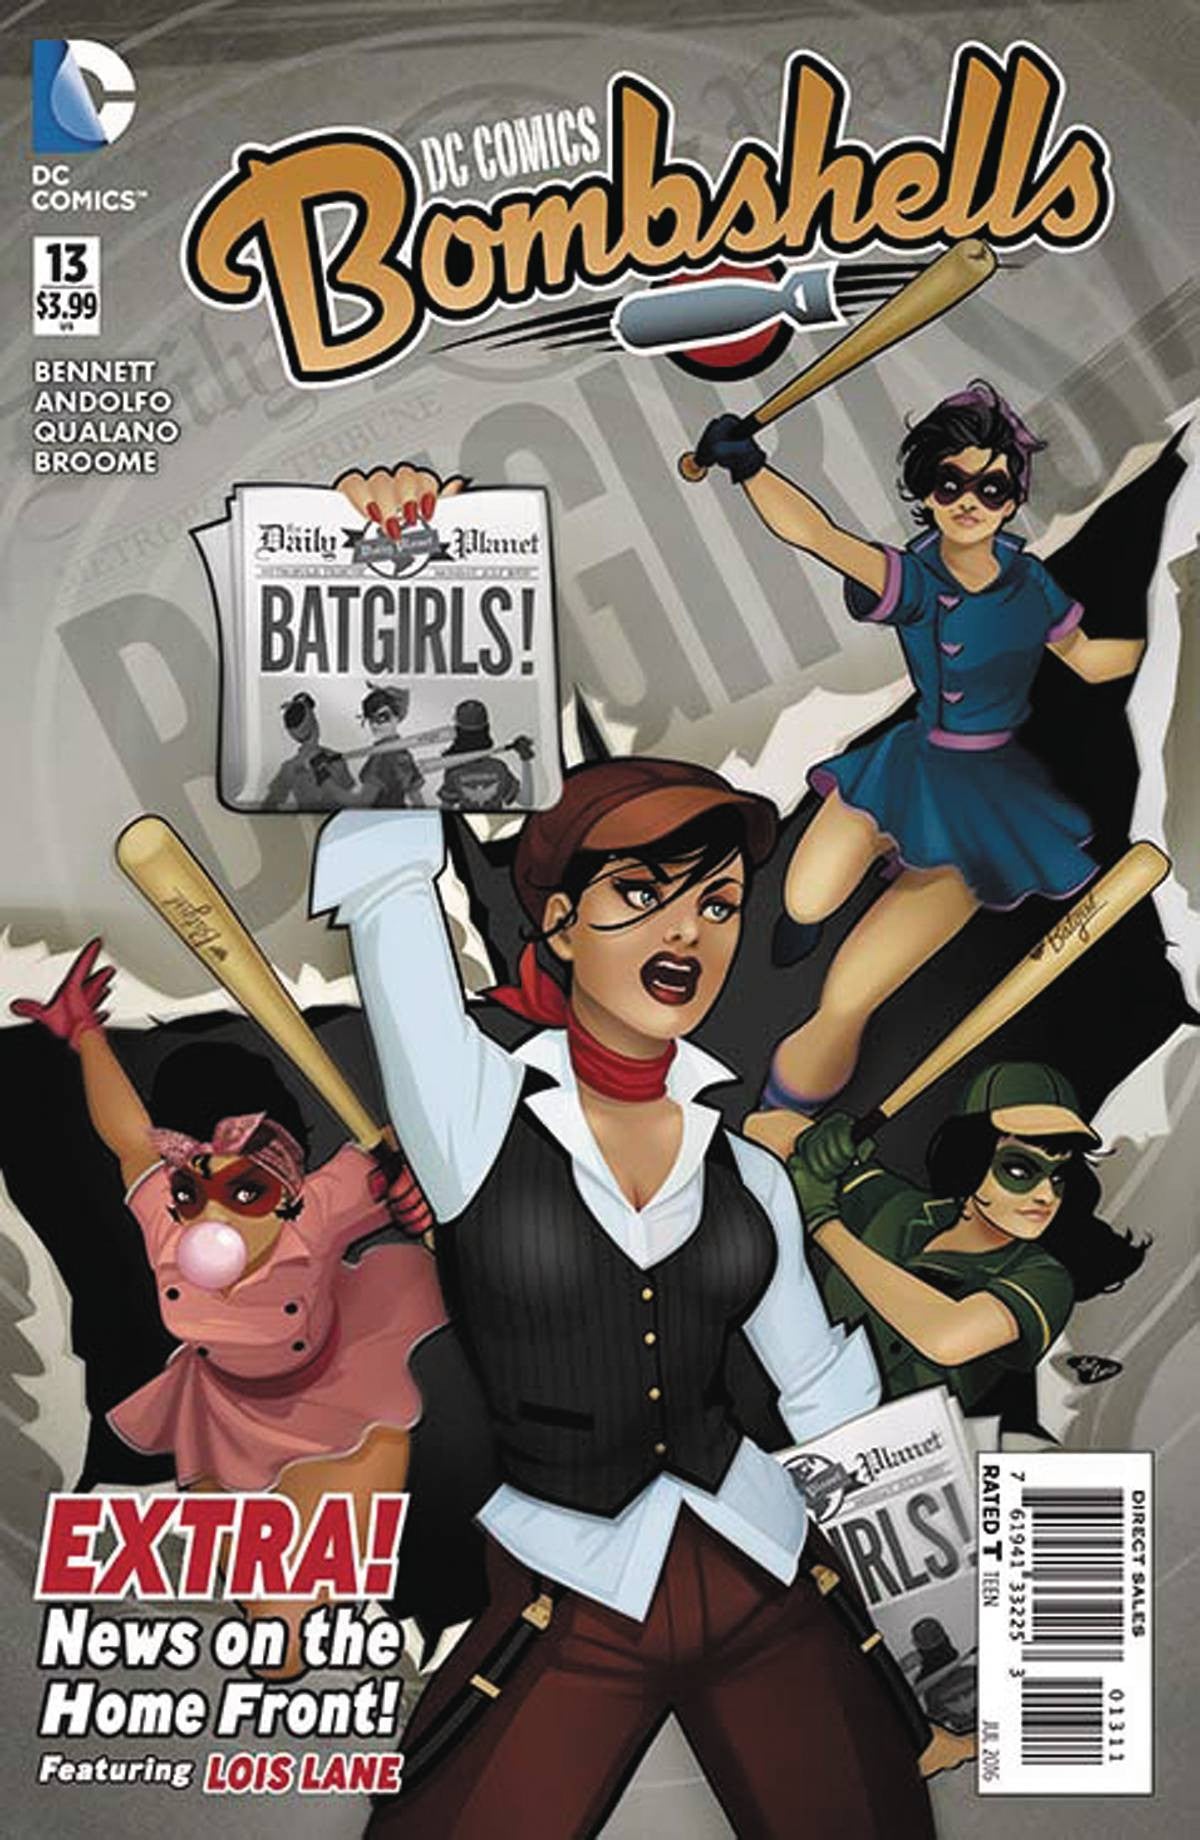 DC COMICS BOMBSHELLS #13 COVER